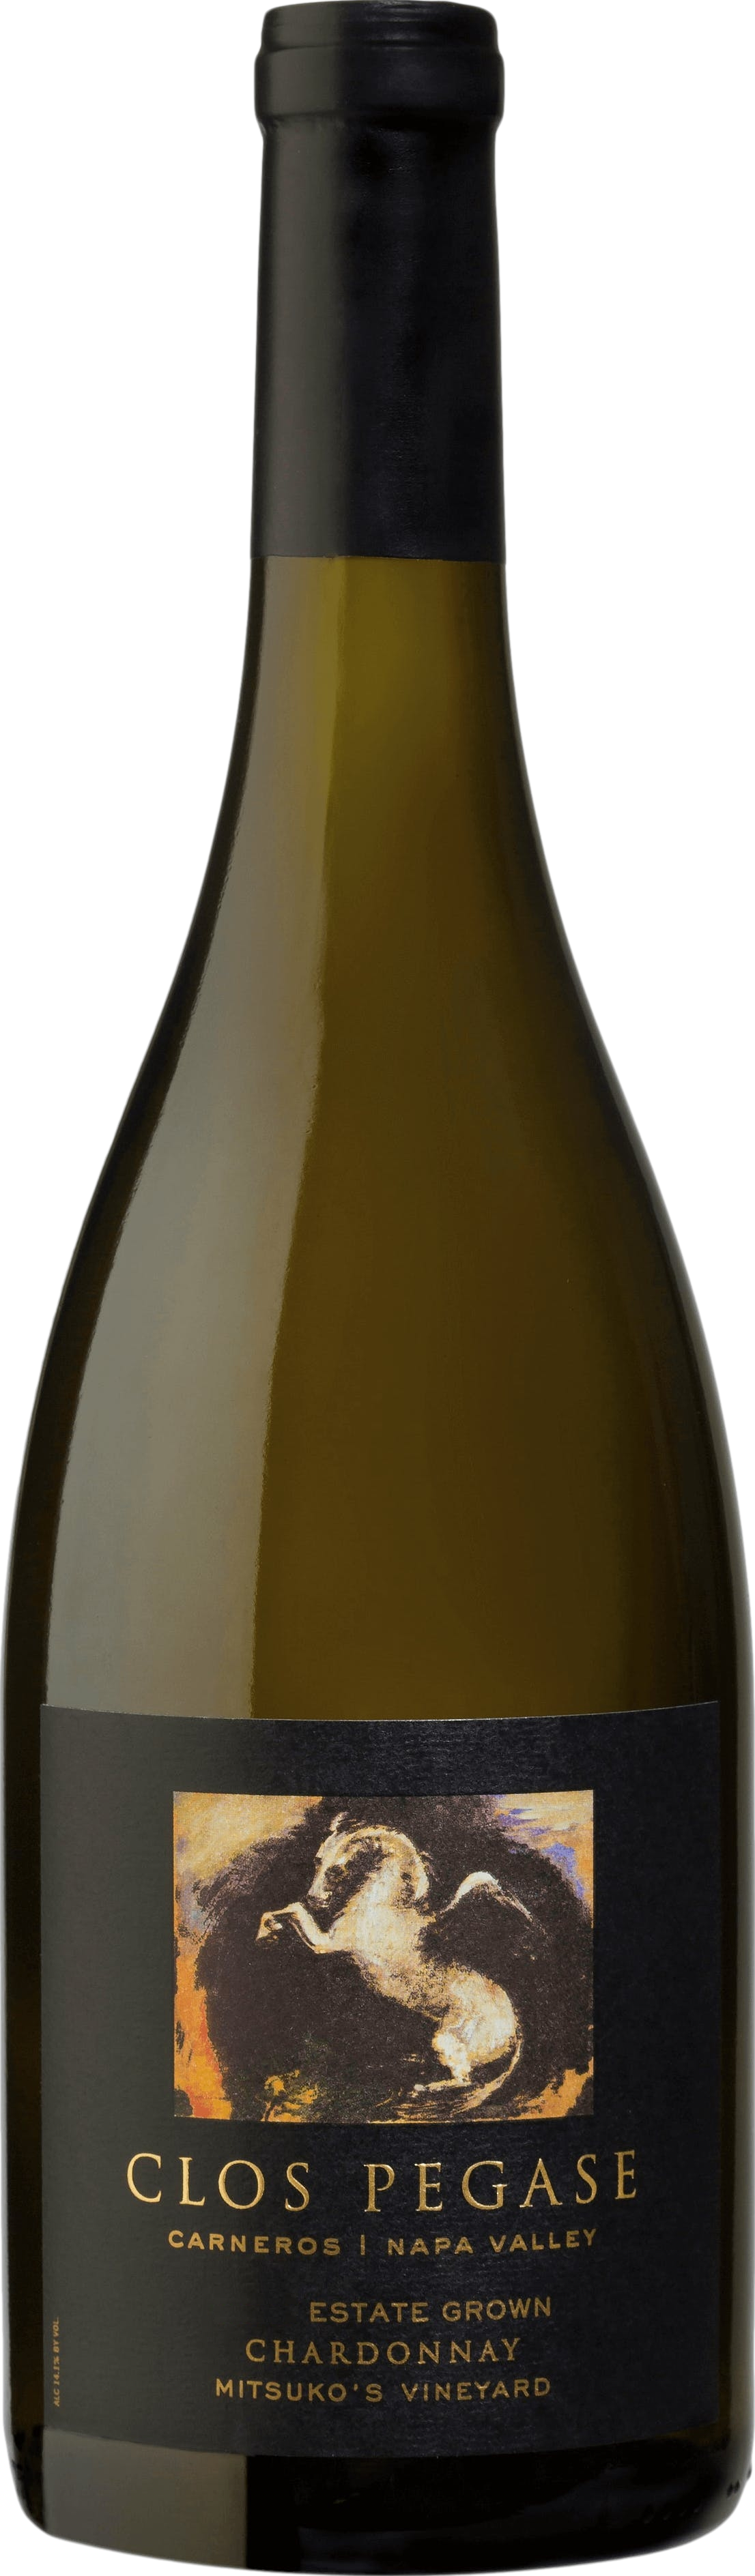 Product image of Clos Pegase Mitsuko's Vineyard Chardonnay 2019 from 8wines